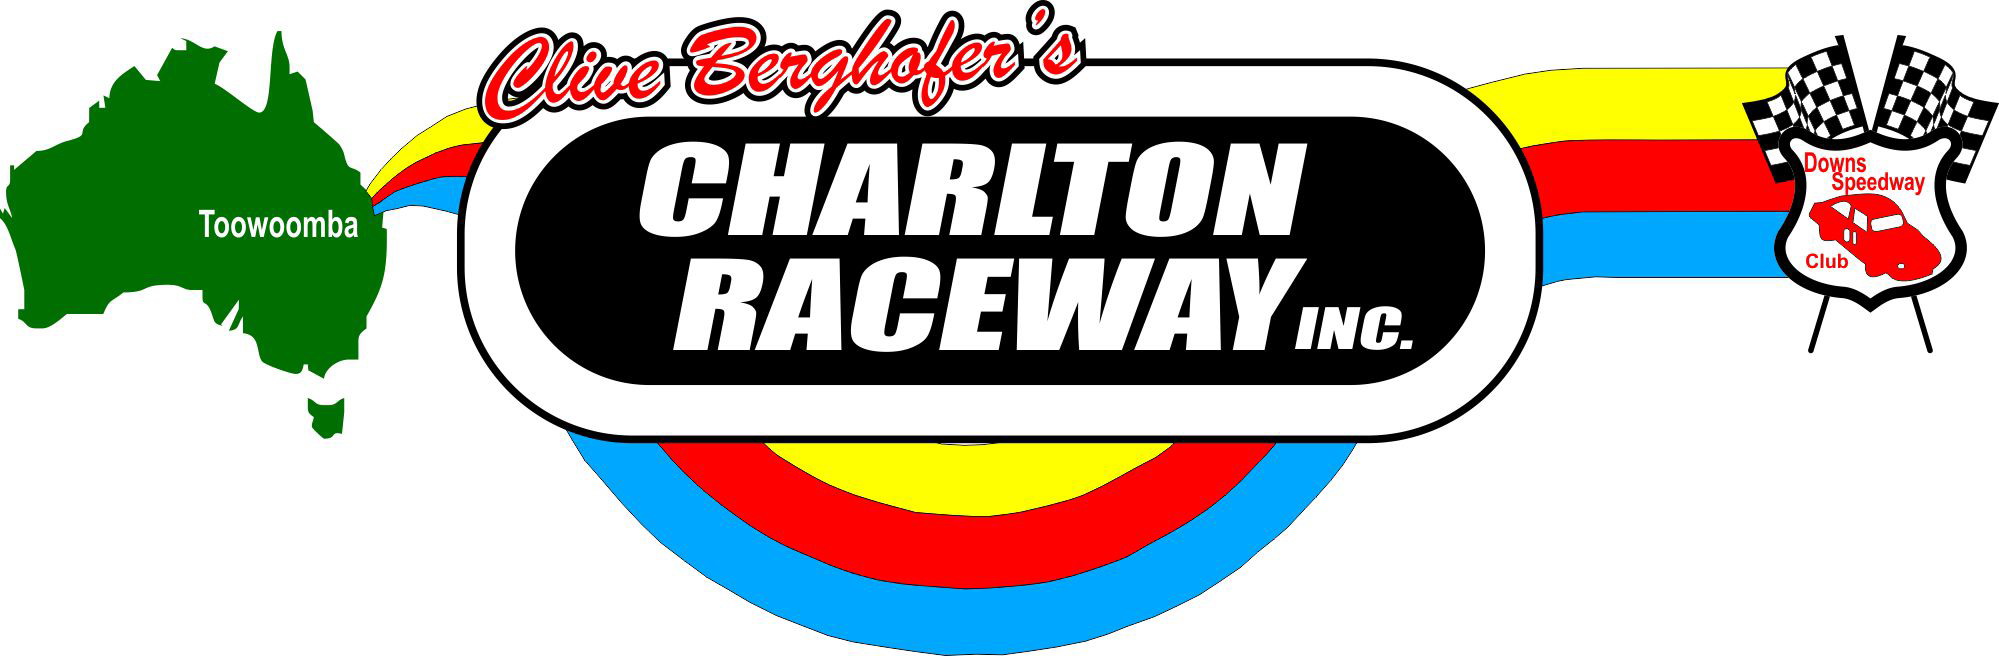 Charlton Raceway Inc logo